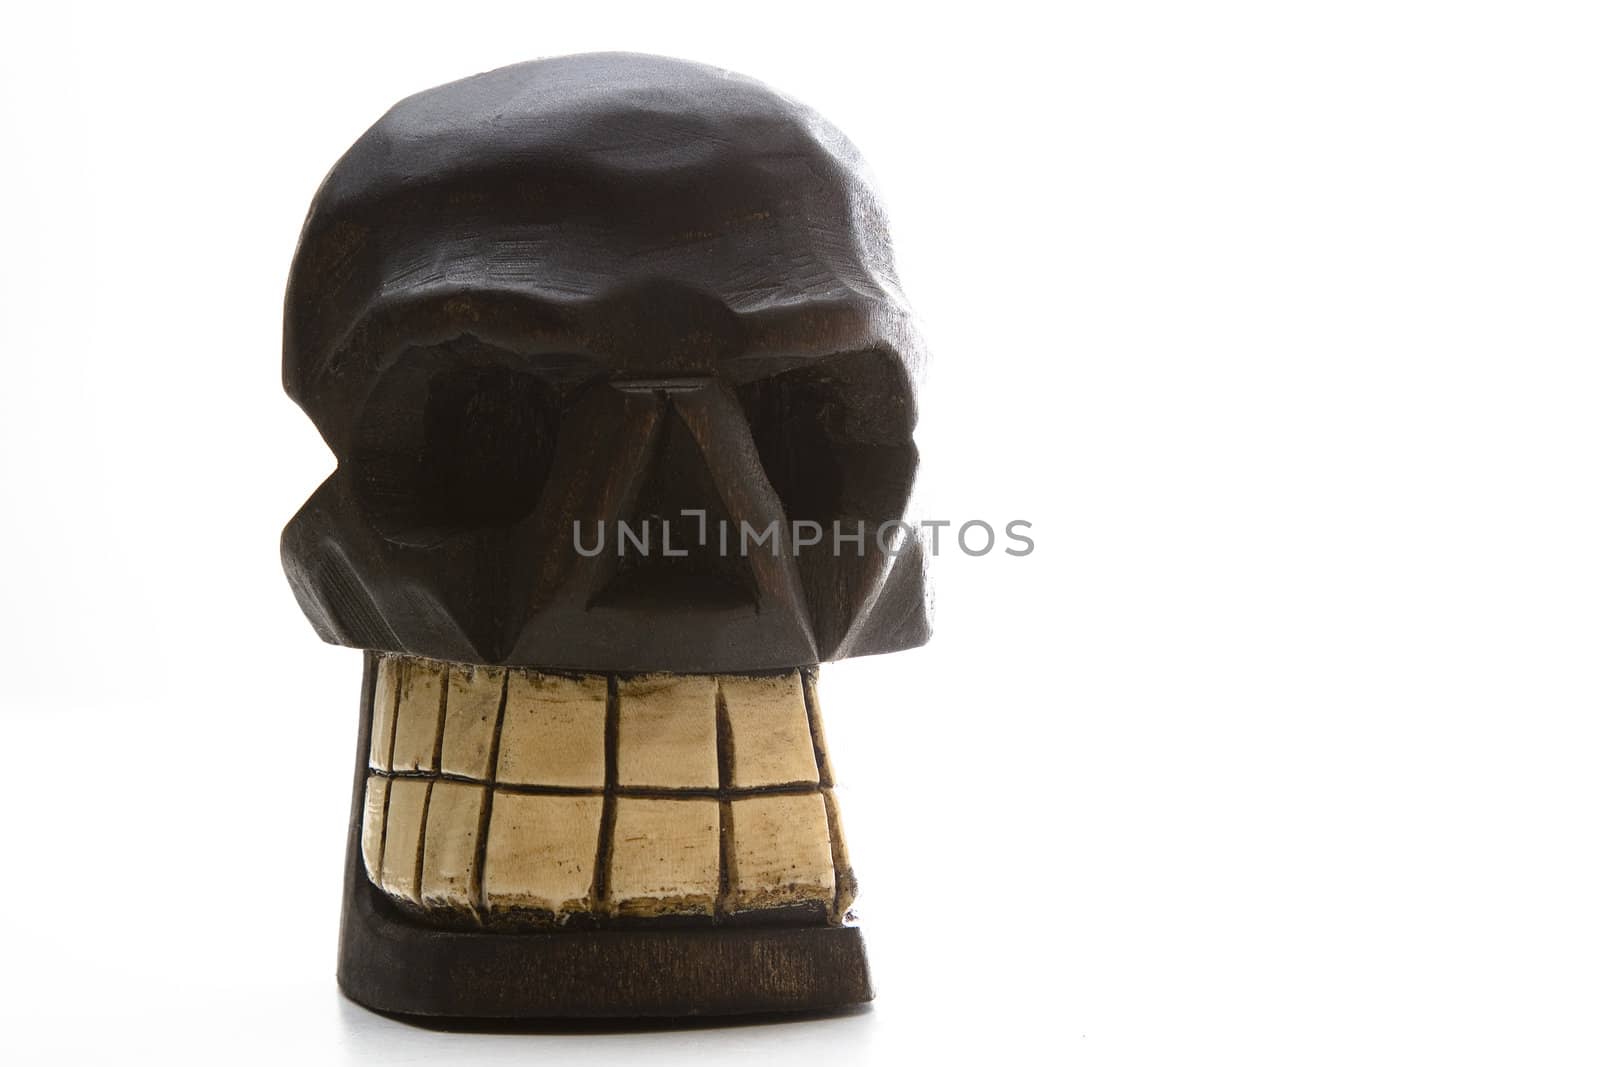 Mexican Dia de los muertos skull sculpture in wood